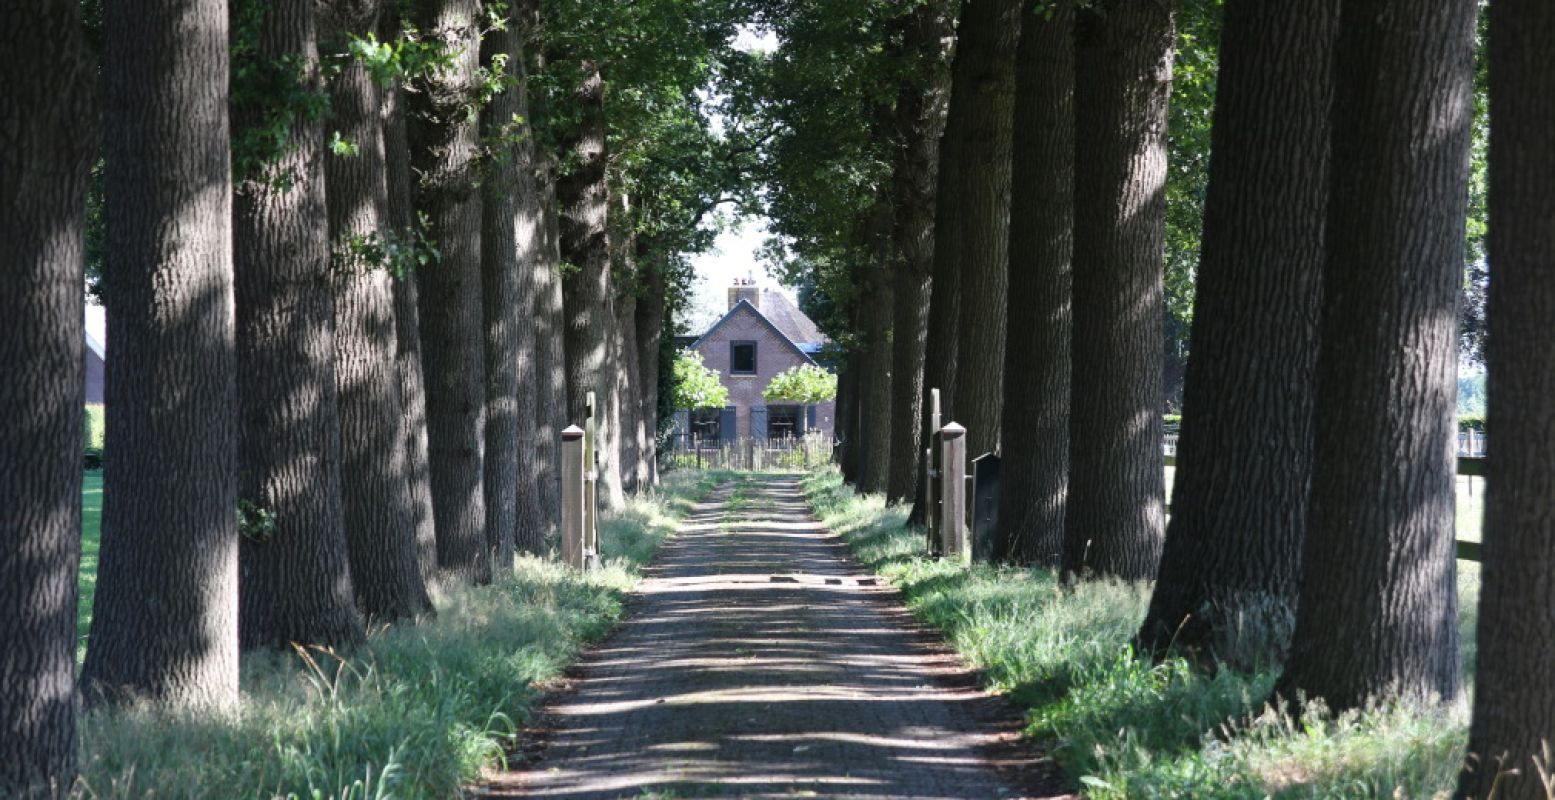 Het pittoreske platteland van Soest. Foto: DagjeWeg.NL, Coby Boschma.